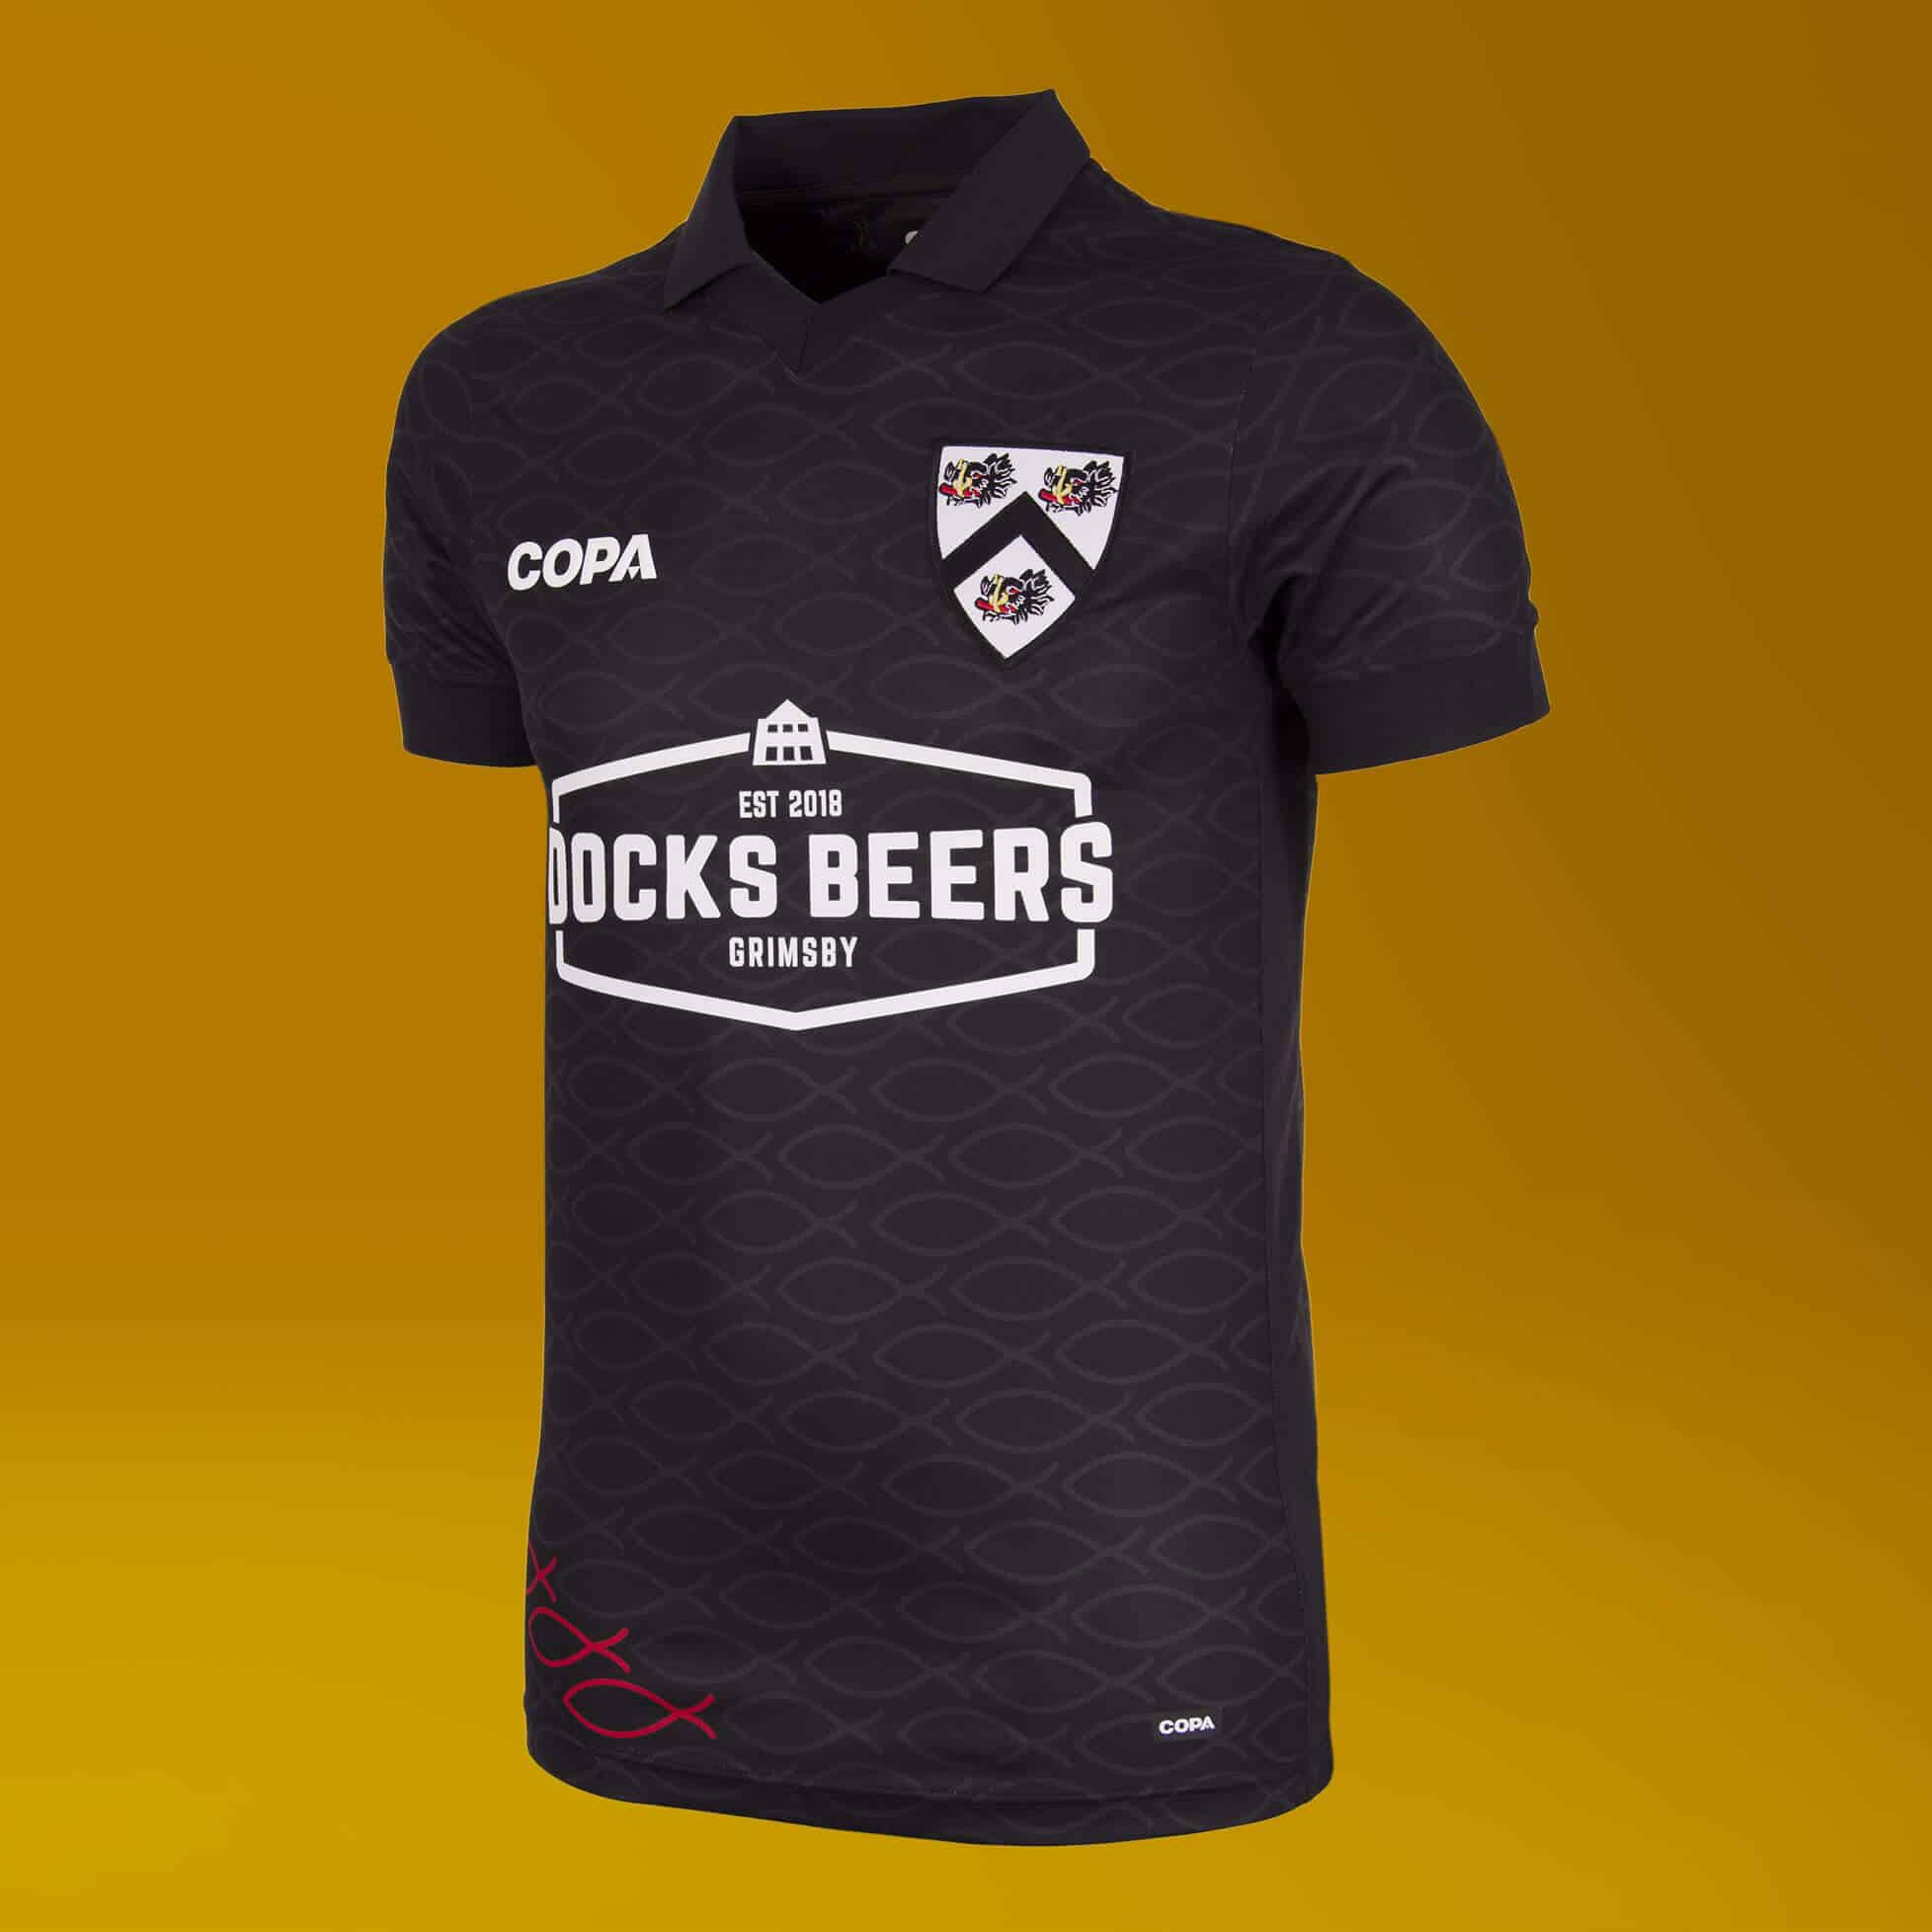 Docks beers football shirt